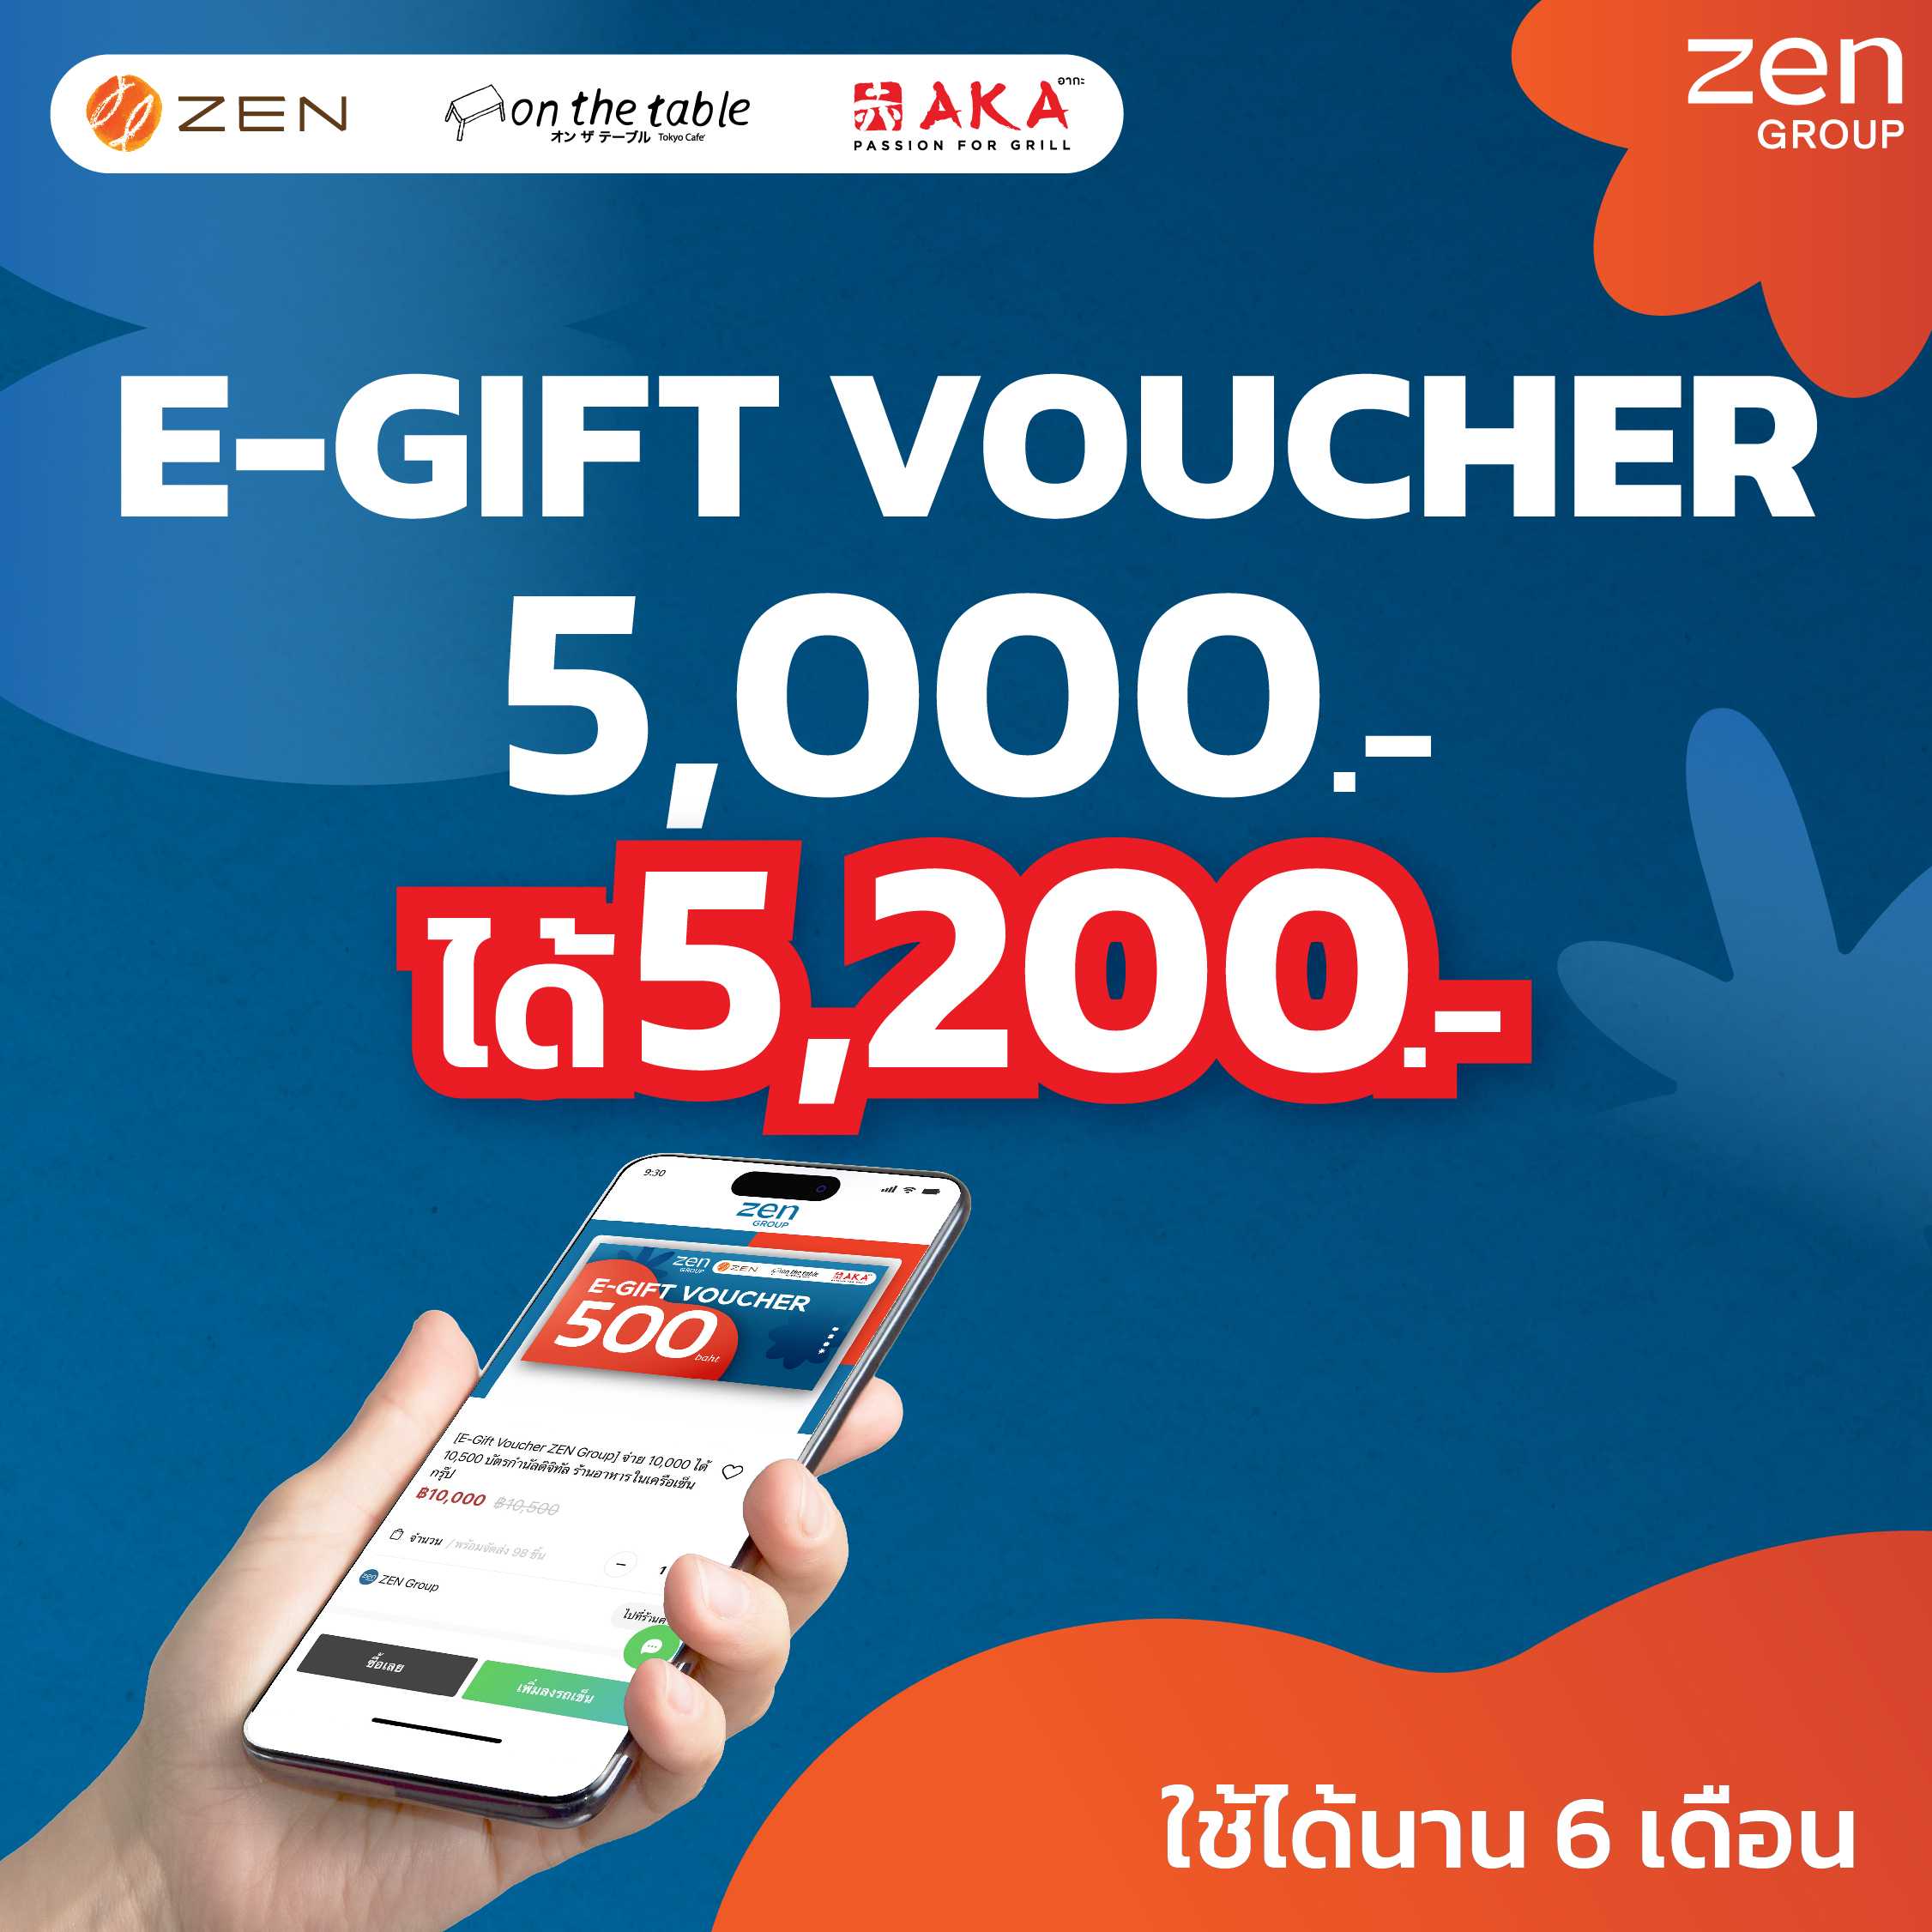 [E-Gift Voucher ZEN Group] จ่าย 5,000 ได้ 5,200 บัตรกำนัลดิจิทัล ร้านอาหารในเครือเซ็น กรุ๊ป